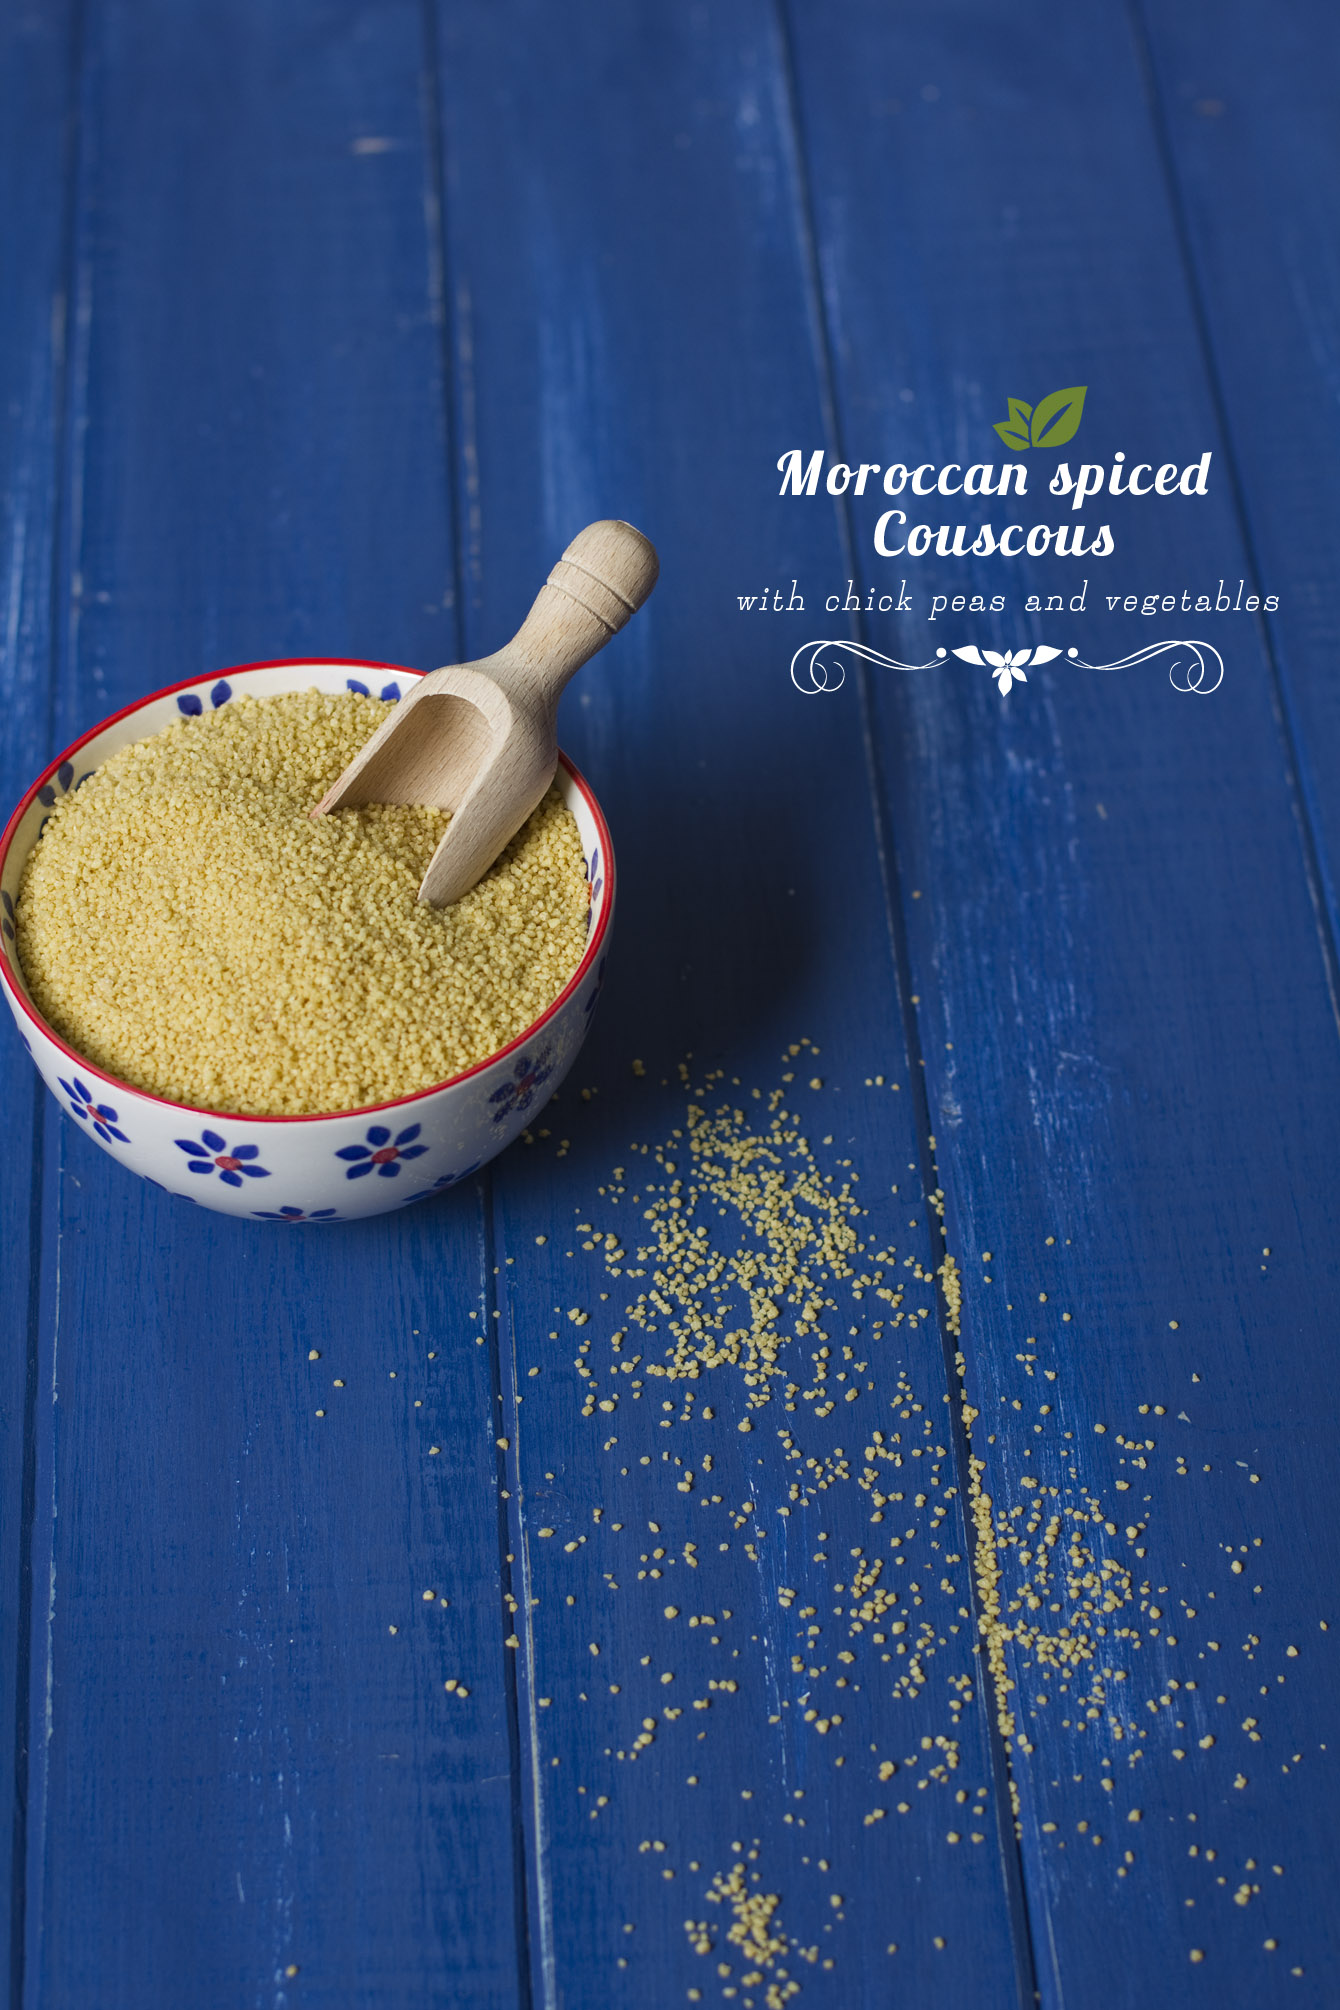 morocco, couscous, chickpeas, veggies, vegetables, vegetarian, 30 mins or less, middle-east, Moroccan cuisine, vegan, gluten-free